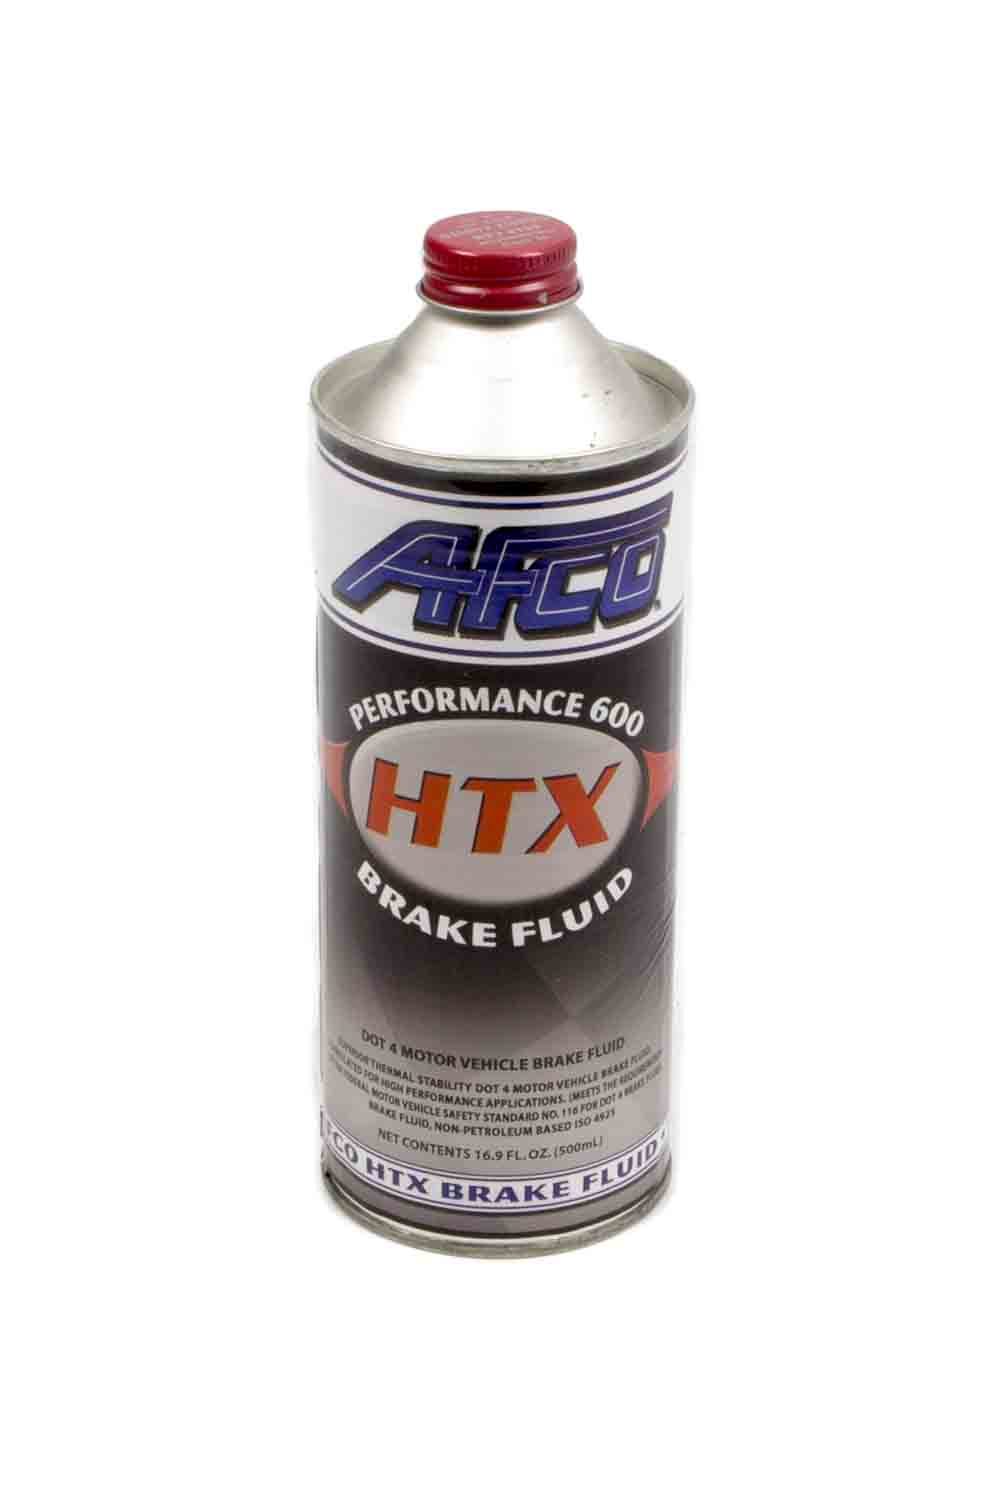 Afco 6691903 - Brake Fluid, High Performance HTX, DOT 4, 16.9 oz Bottle, Each